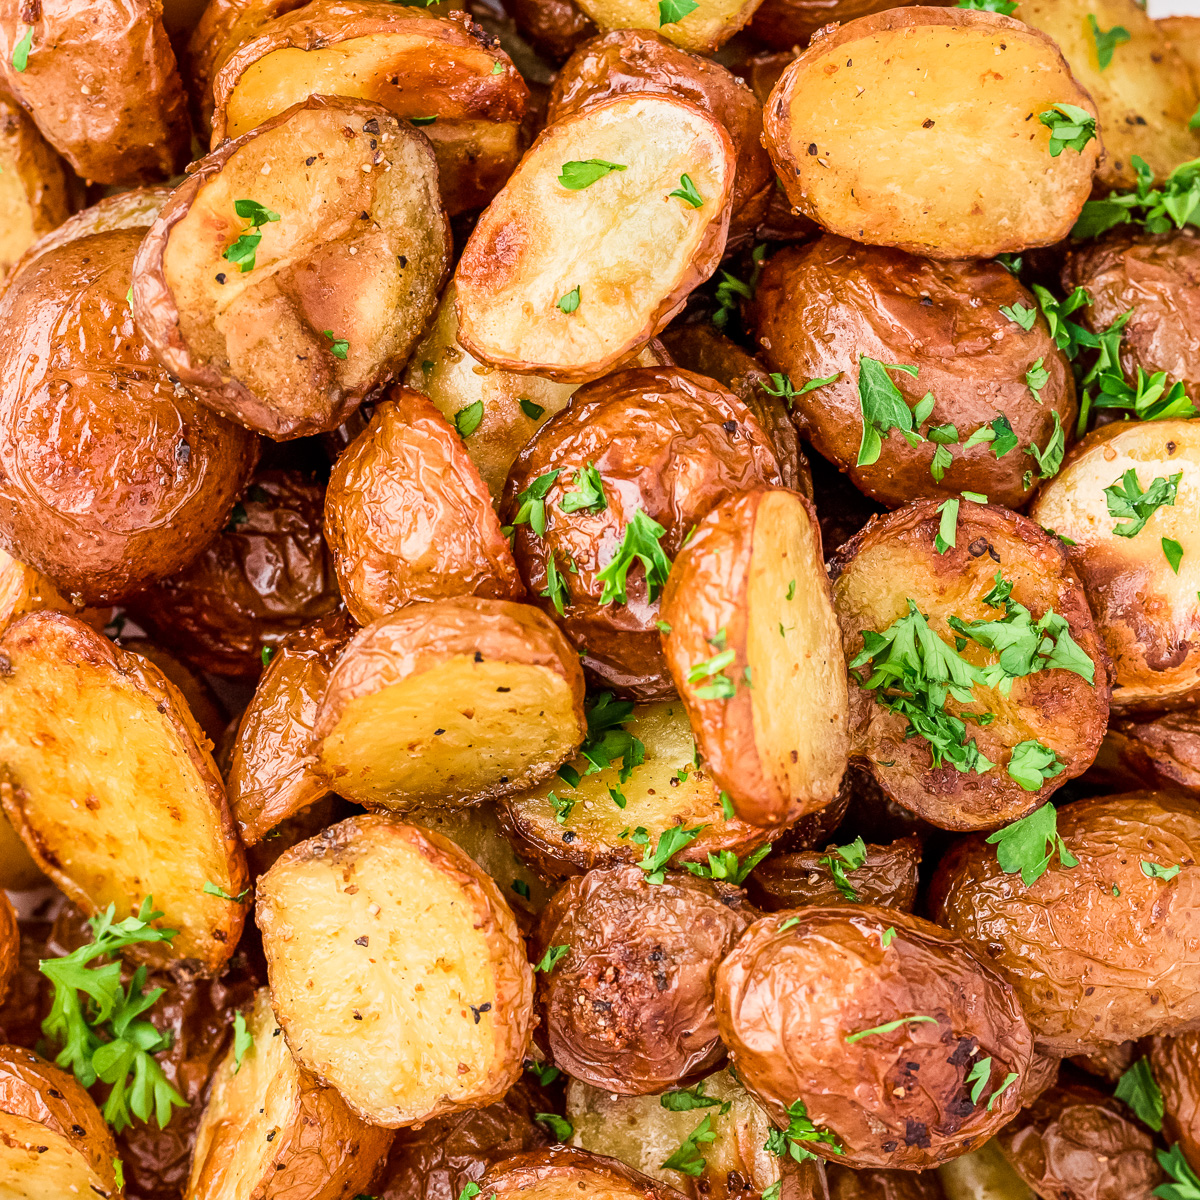 oven roasted potatoes